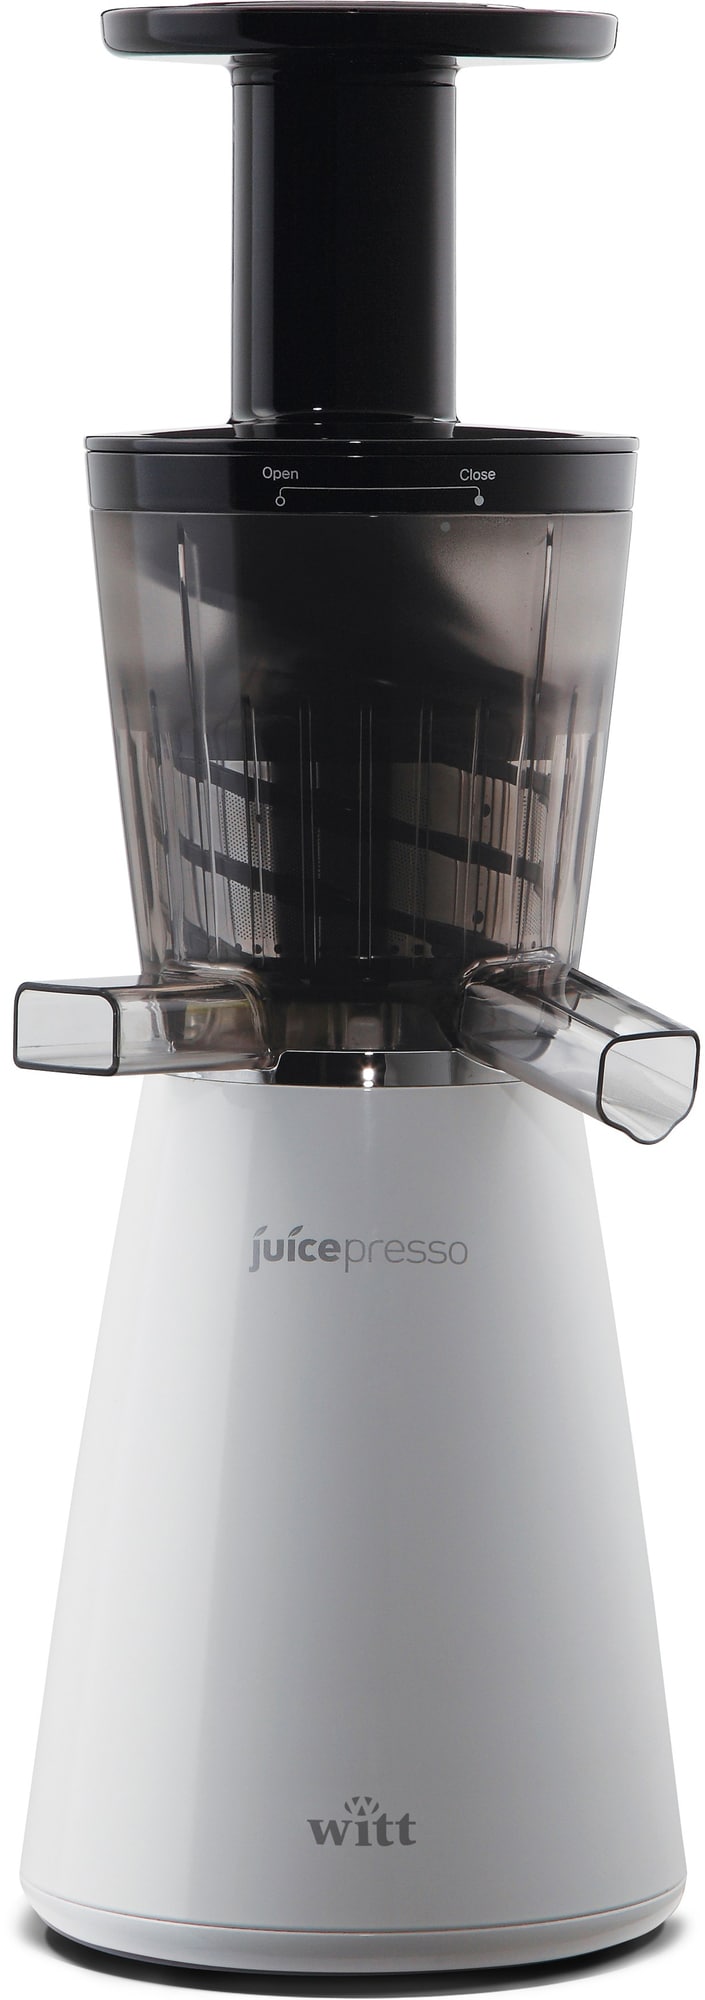 Witt Juicepresso slow juicer WJPW-1 - Elkjøp